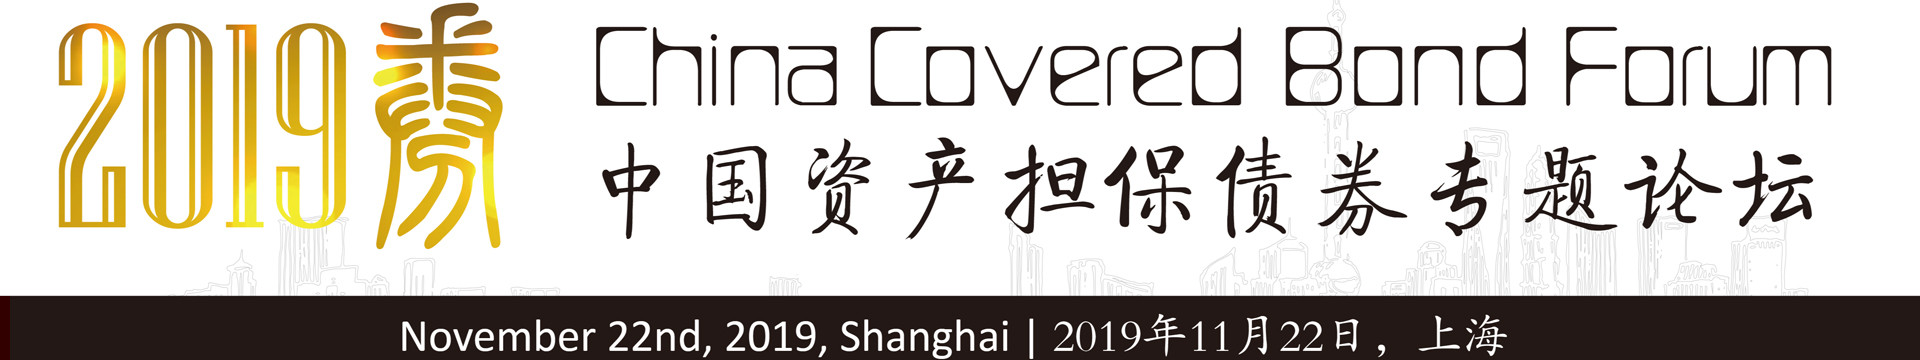 China Covered Bond Forum 2019（中国资产担保债券担保论坛）-上海